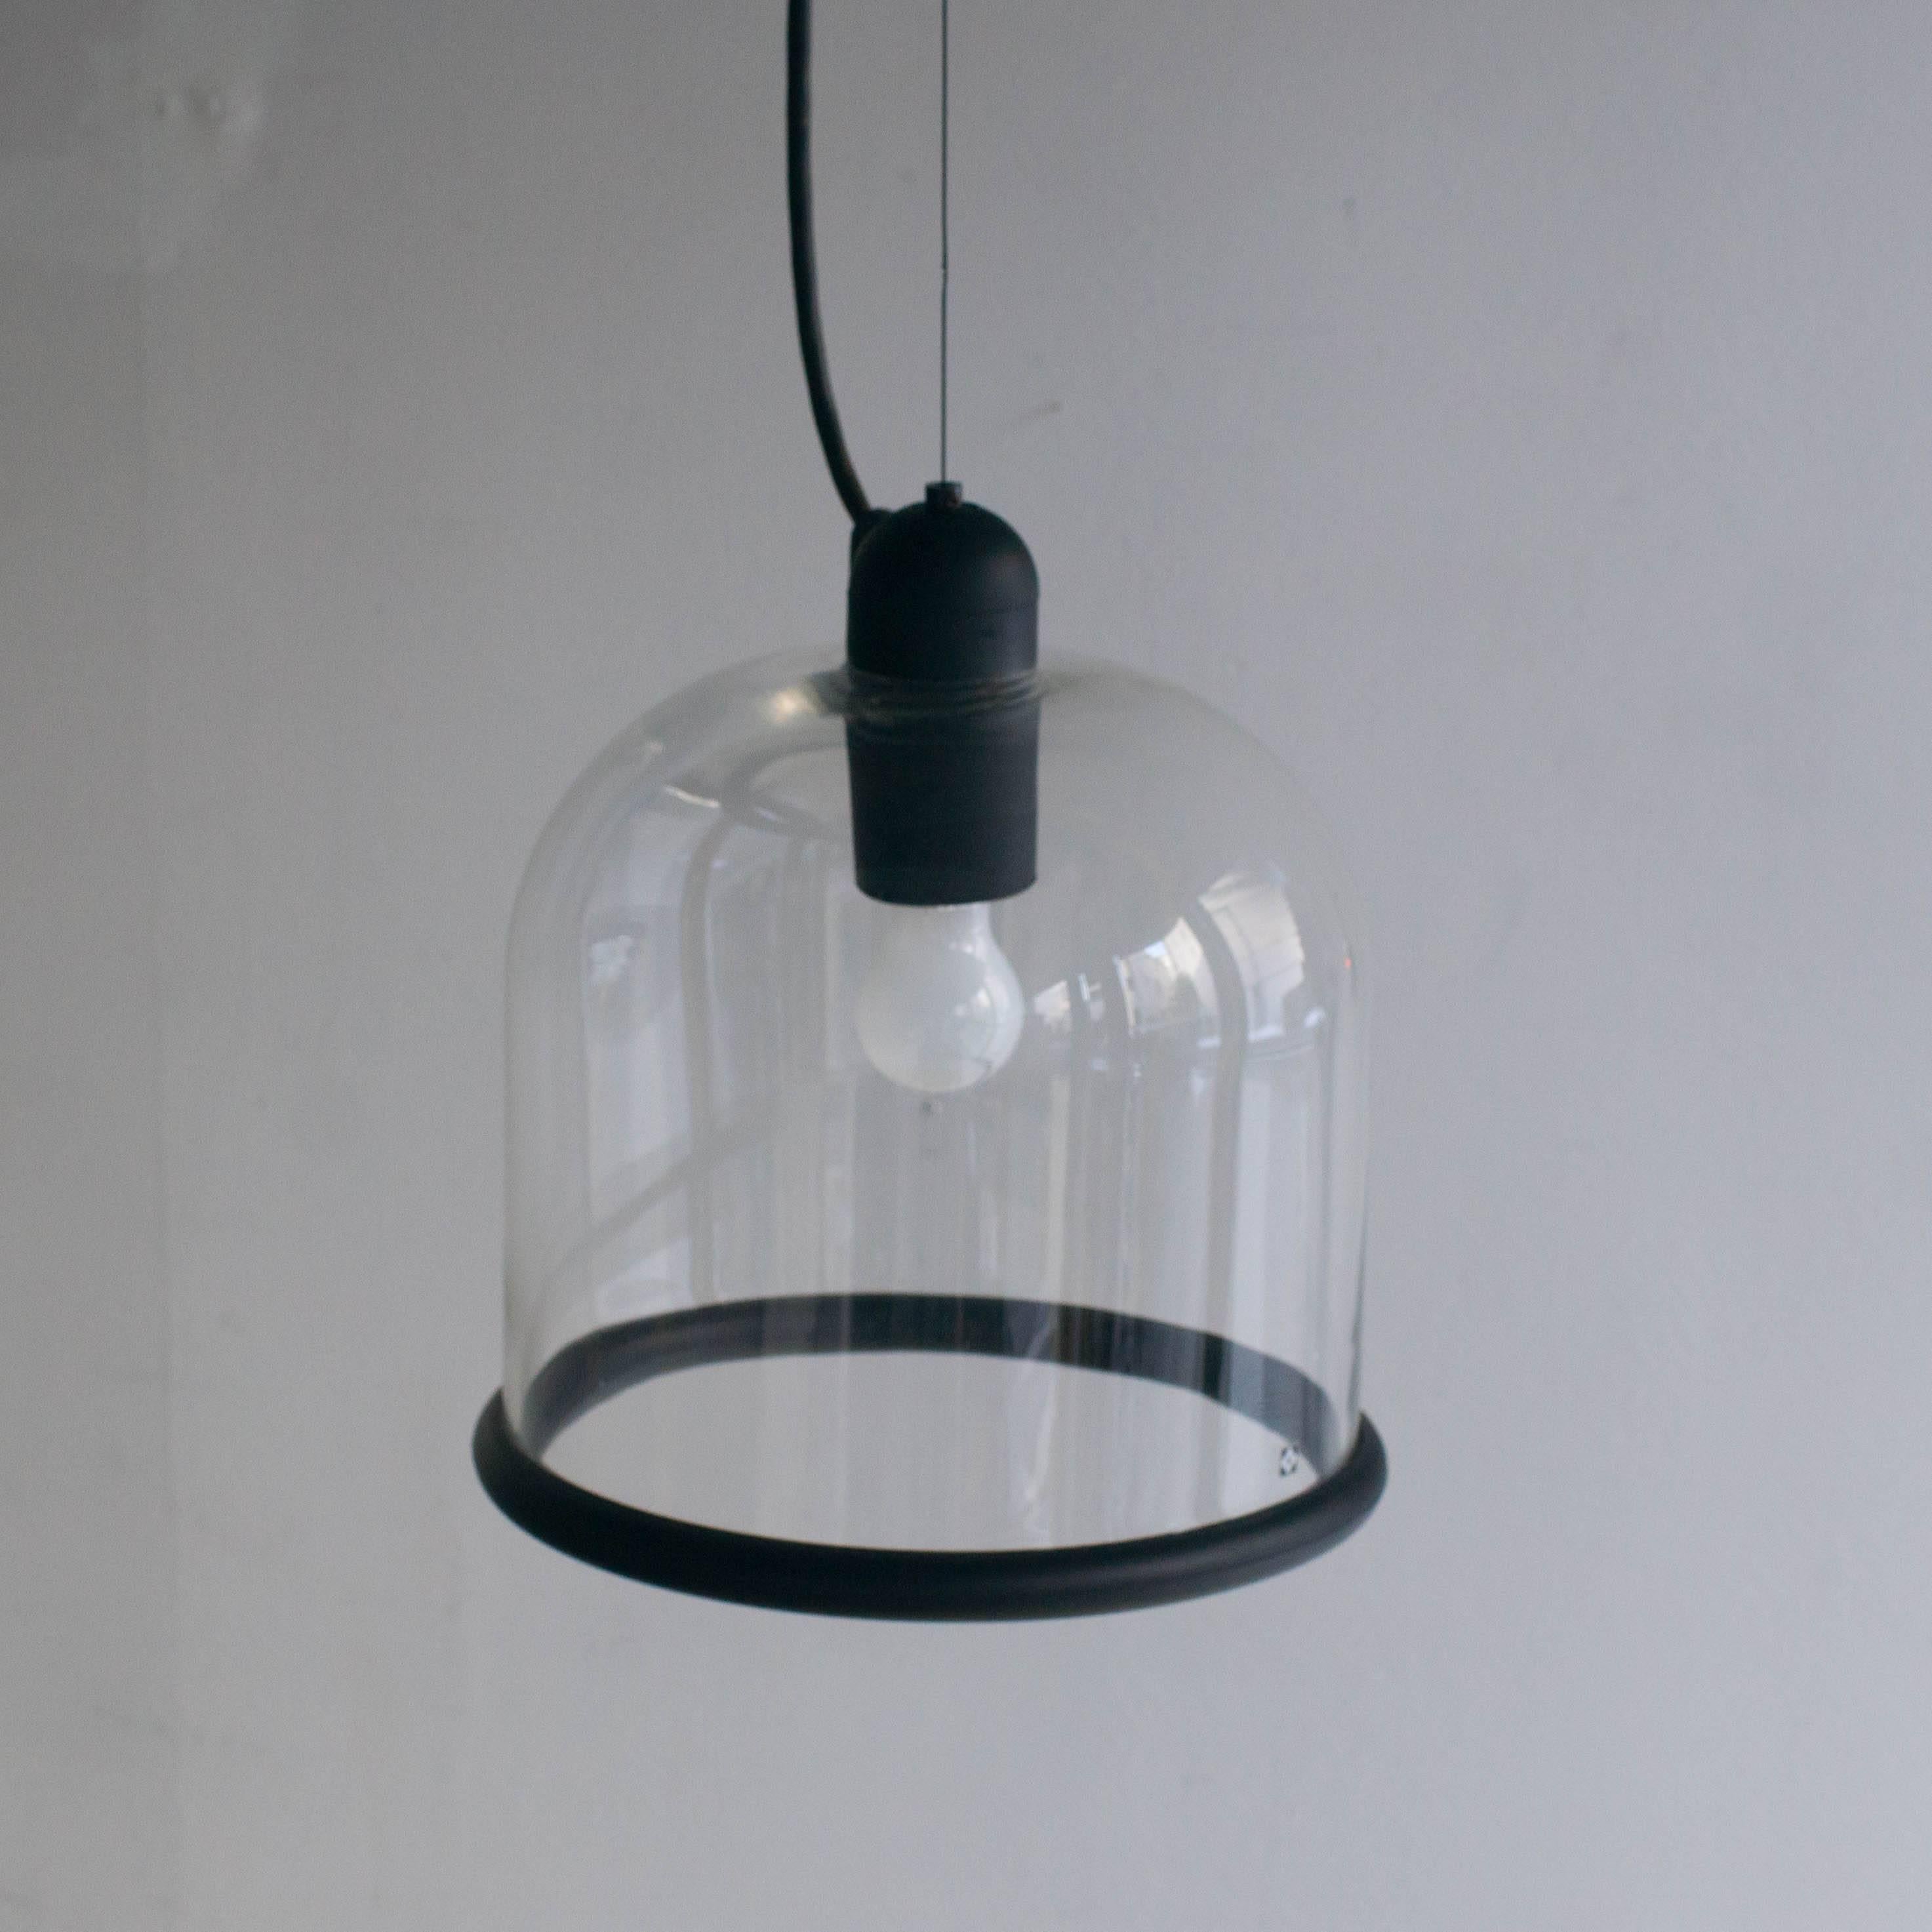 Domani pendant lamp designed by Masayuki Kurokawa for Yamagiwa. Made of glass with rubber lim. Clear glass shade.
E26 bulb.